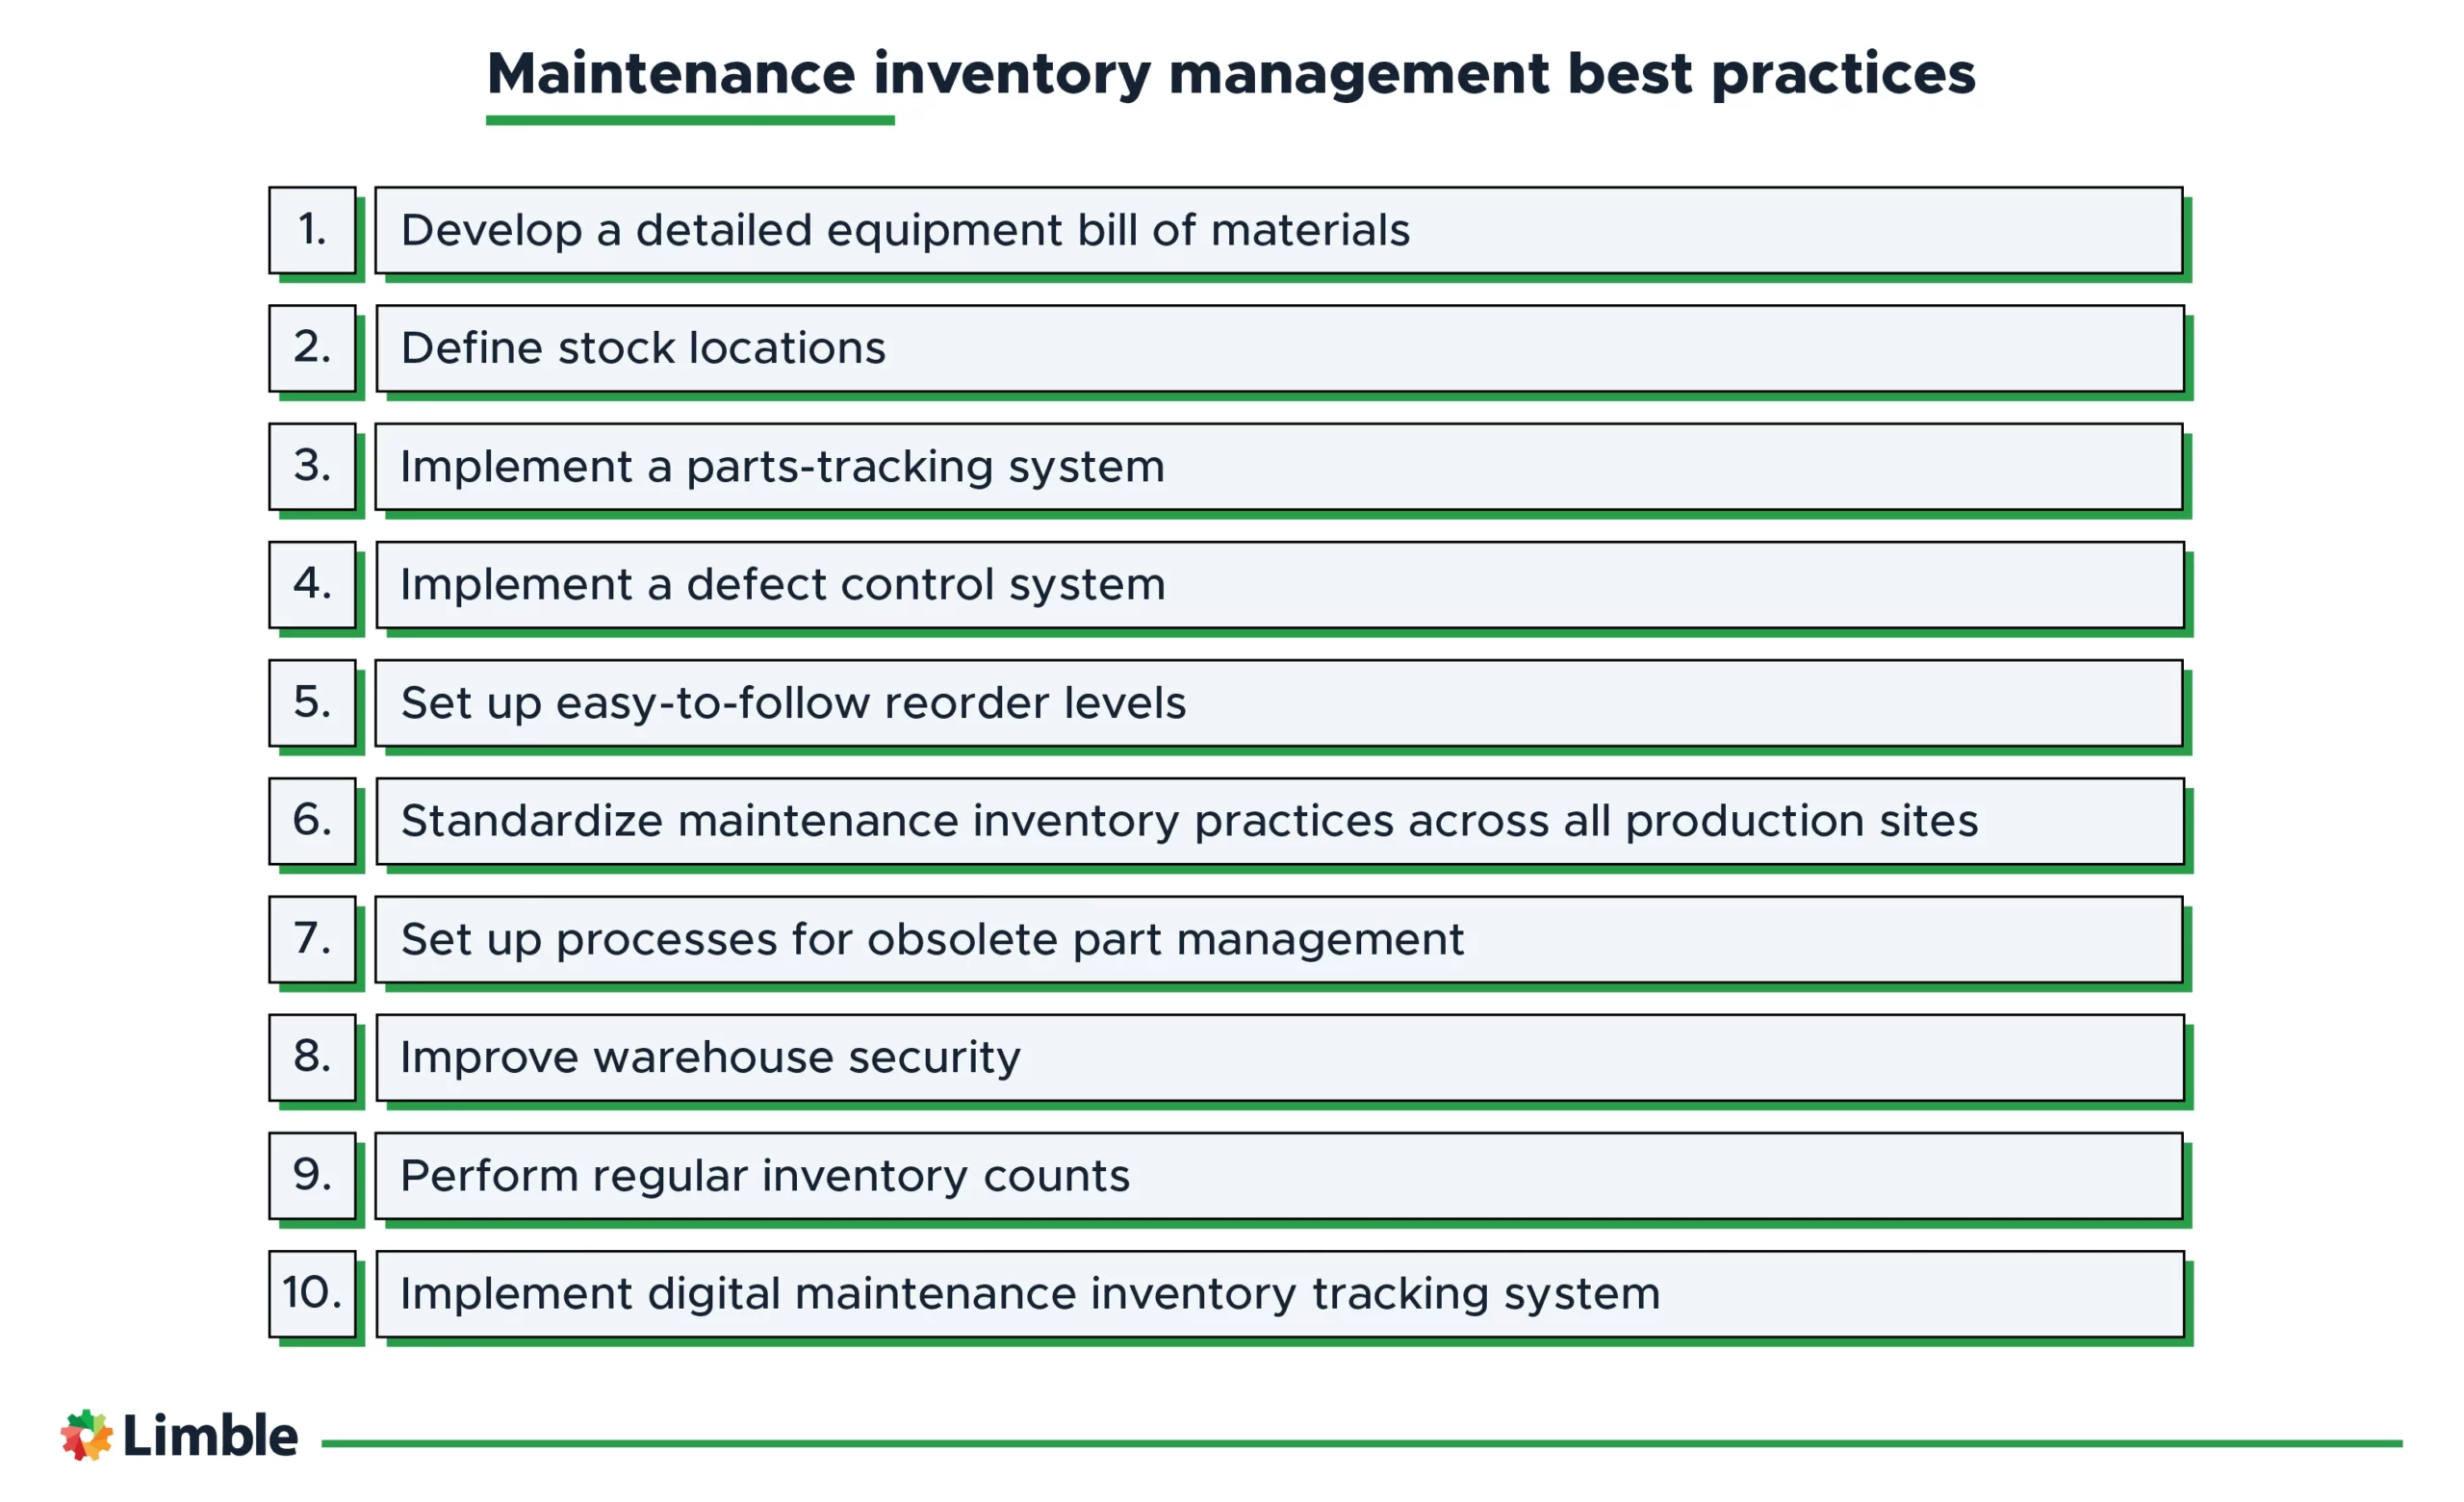 A list of 10 maintenance inventory management best practices.